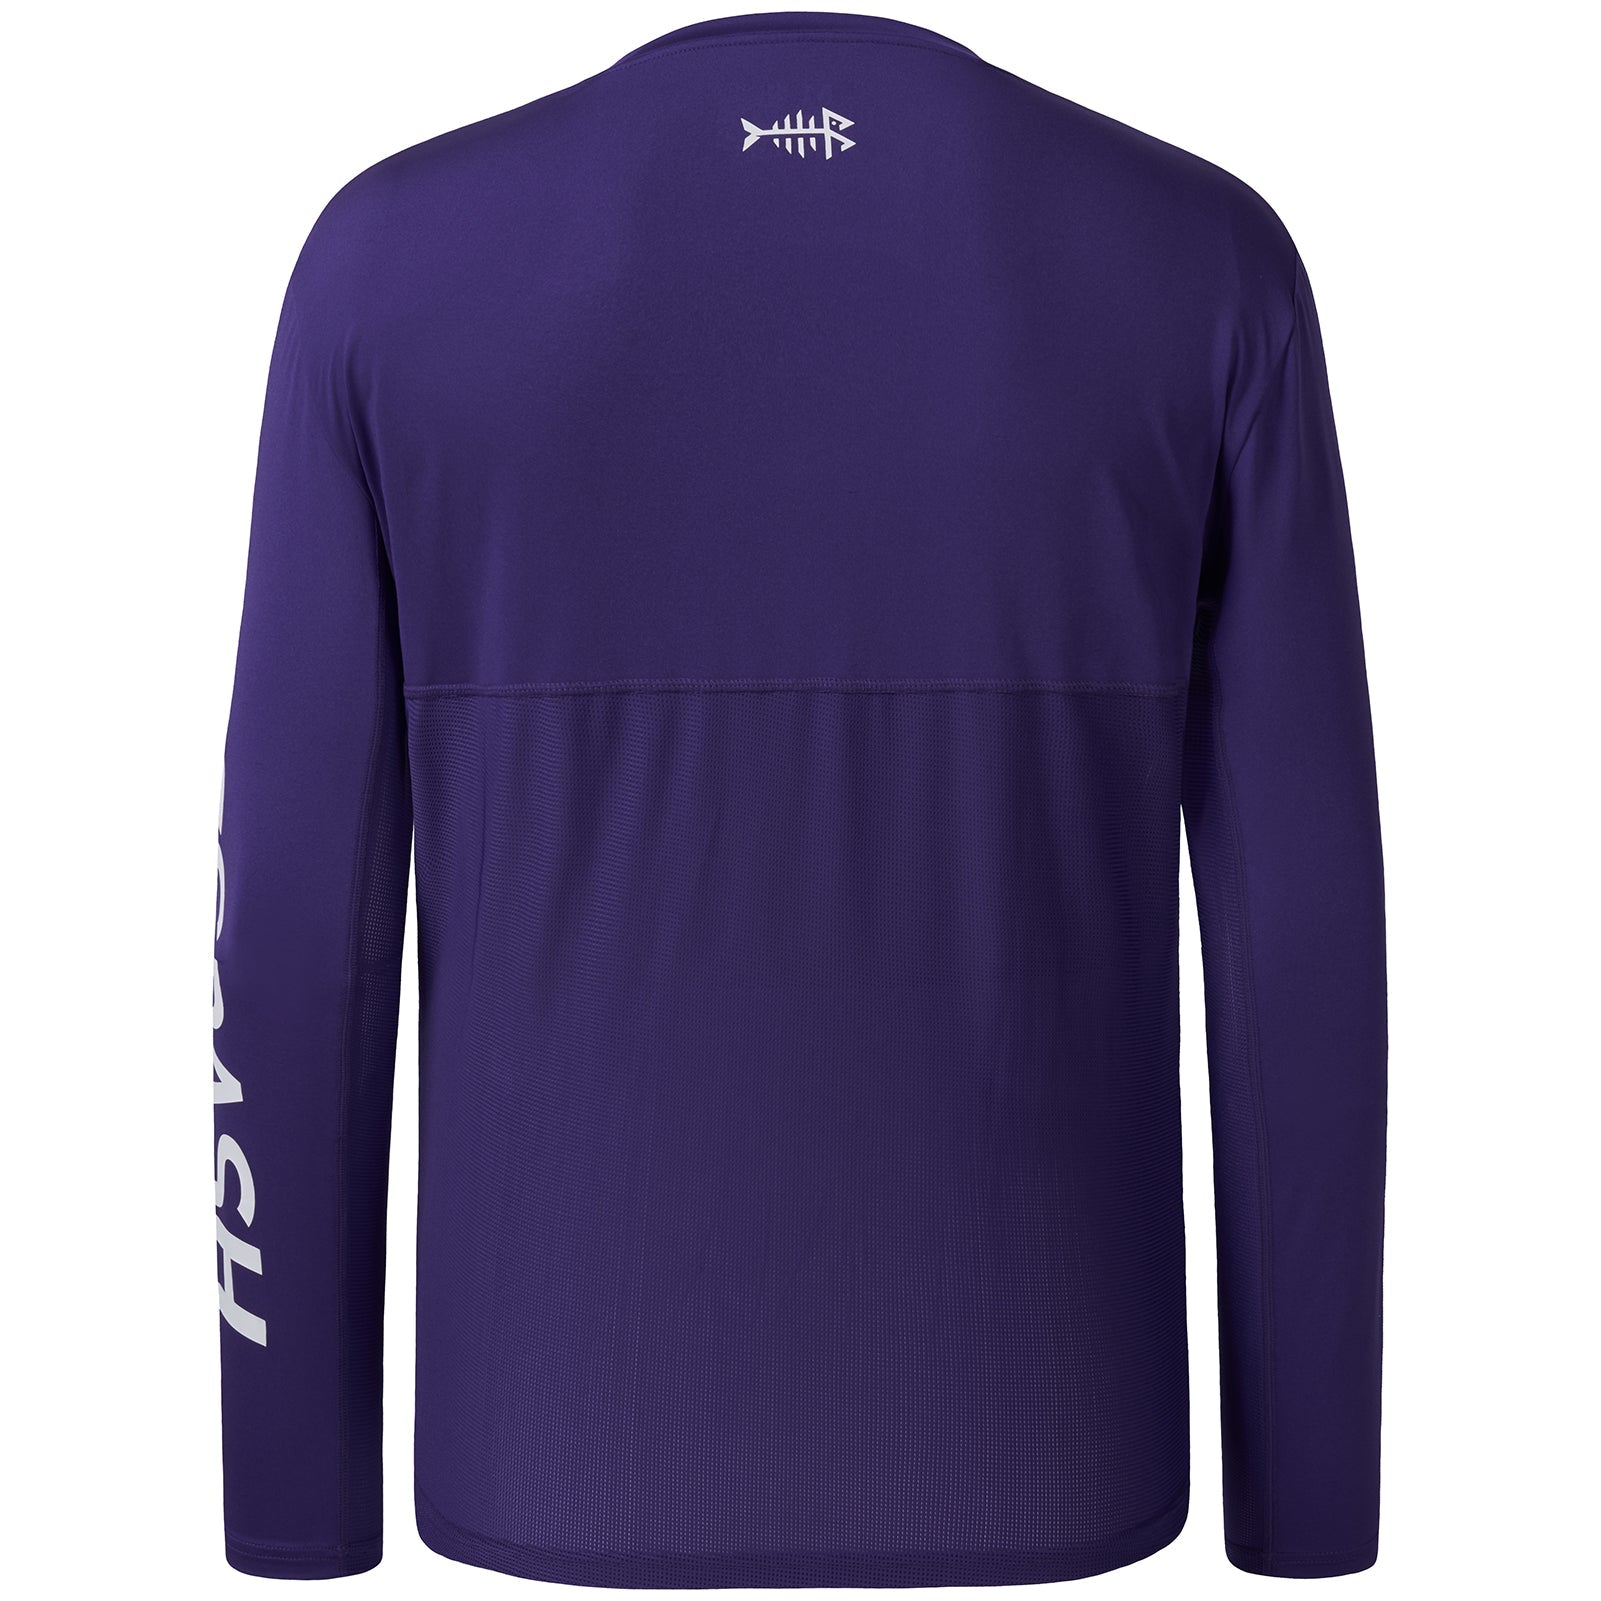 Buy Bassdash Fishing T Shirts for Men UV Sun Protection UPF 50+ Long Sleeve  Tee T-Shirt (Seafoam/Vivid Blue Logo, M) at